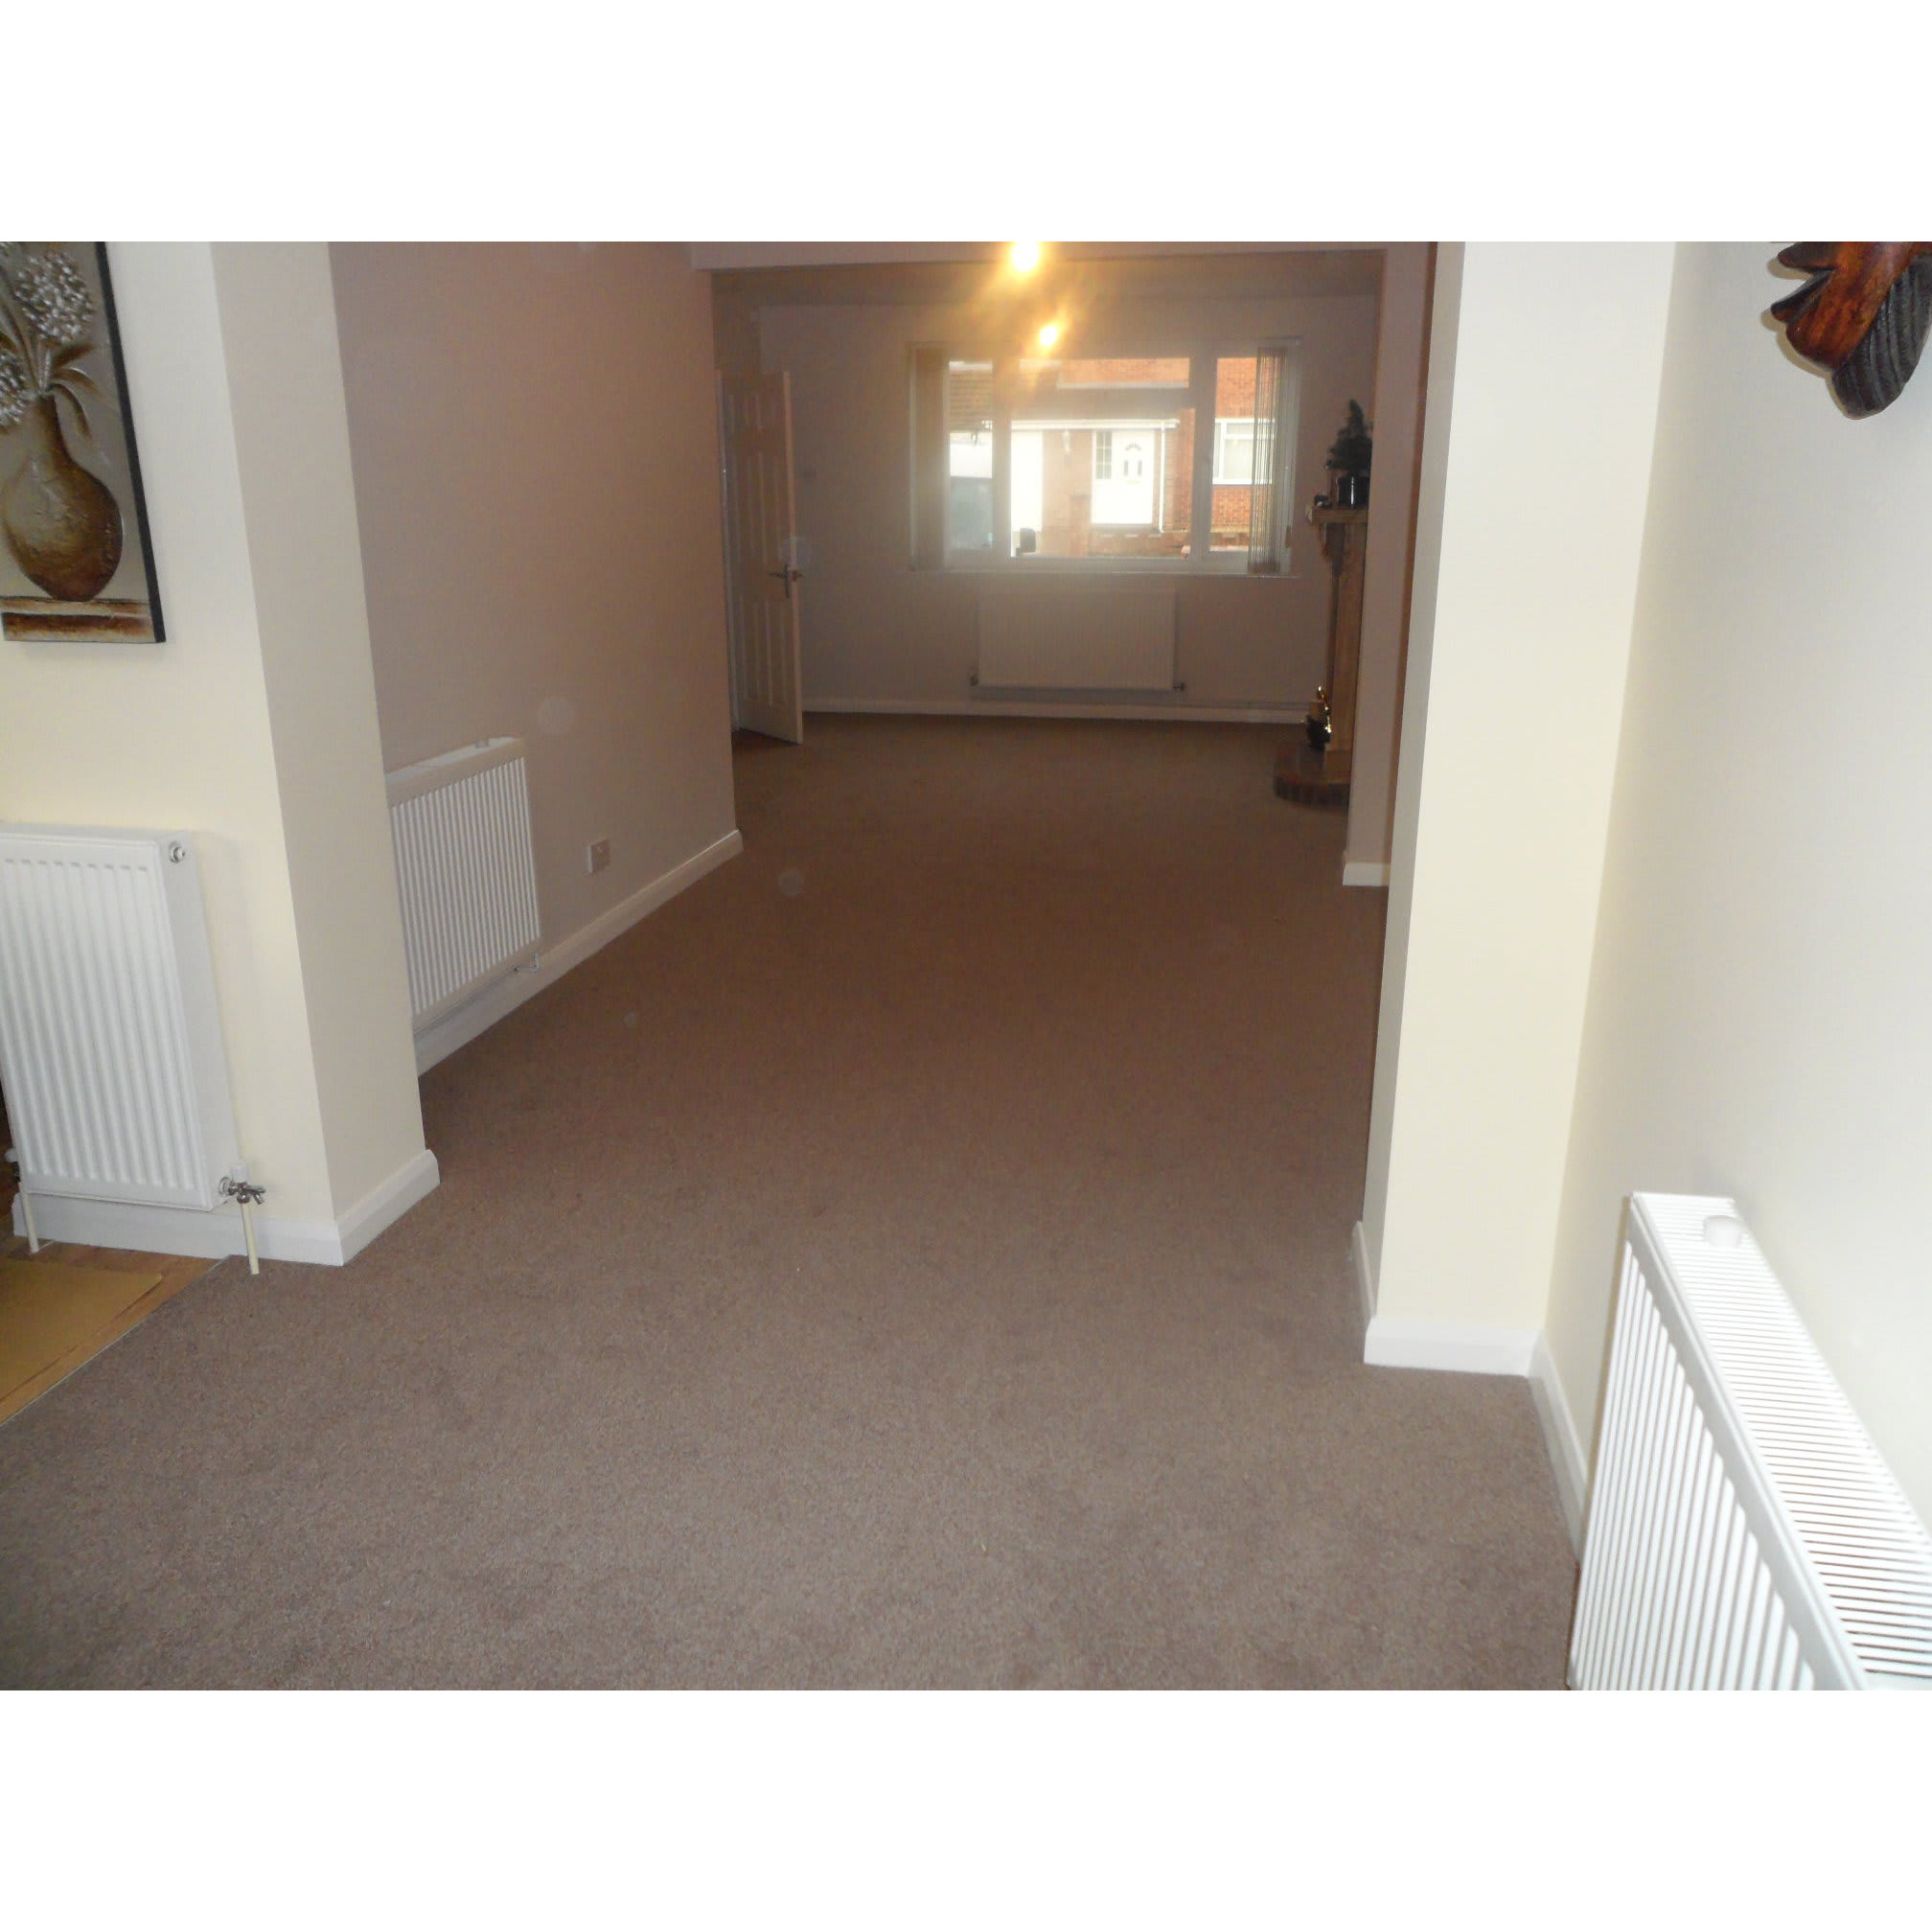 LOGO Phil Taylor Carpets & Flooring Swindon 01793 725506